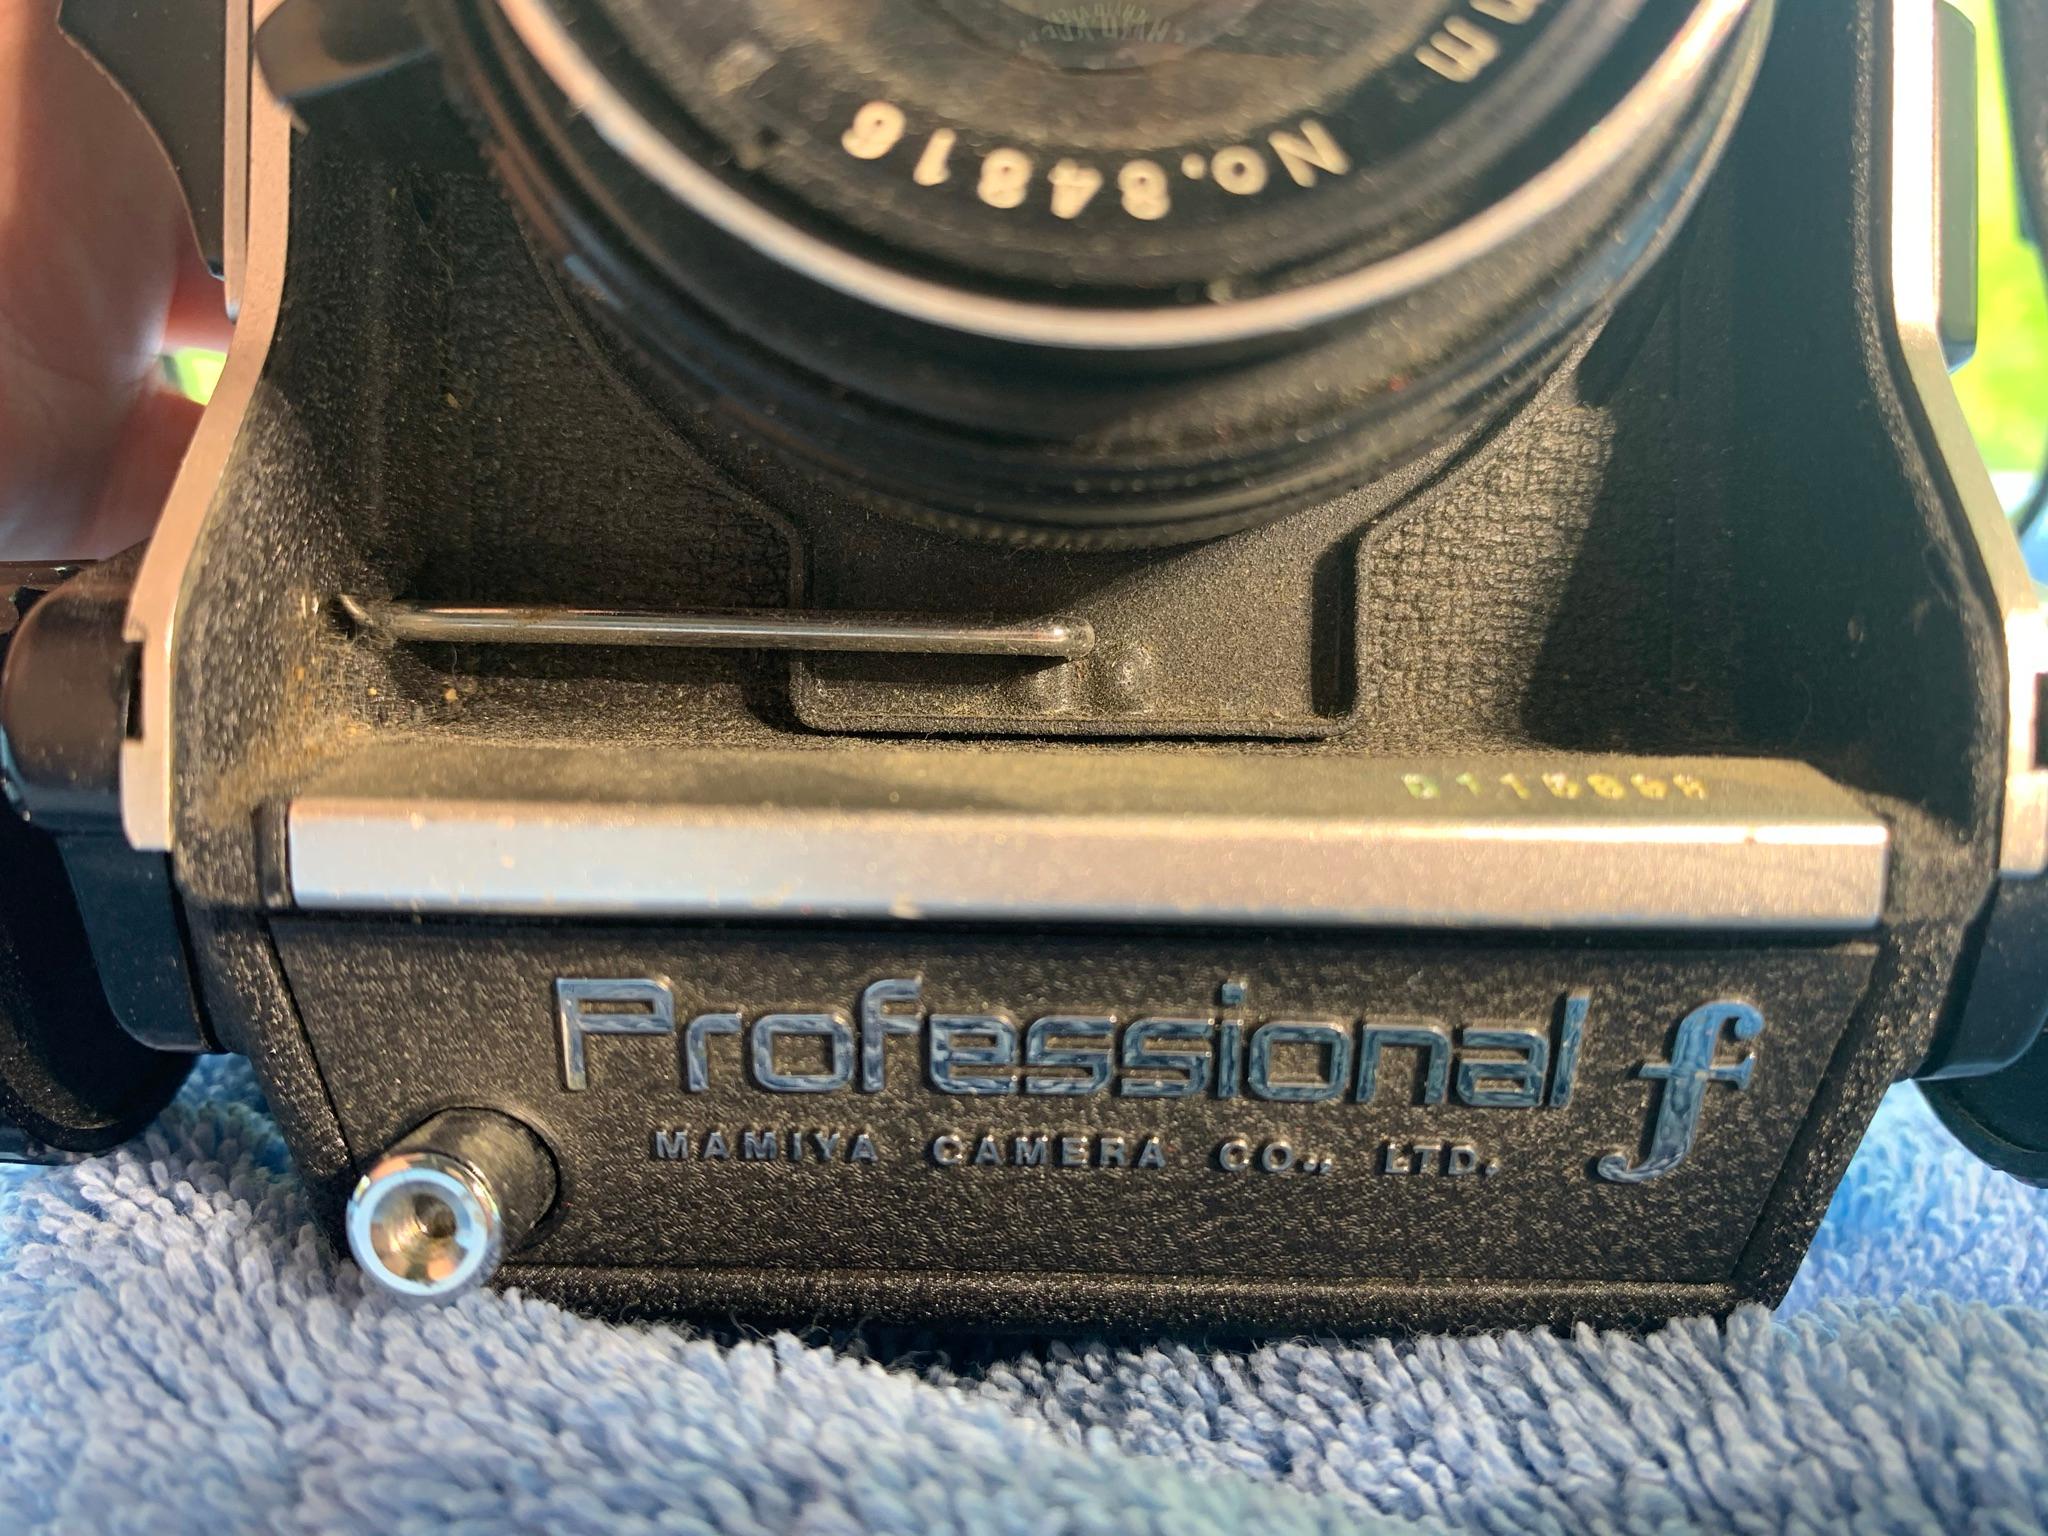 Mamiya C330 Camera Profesional F